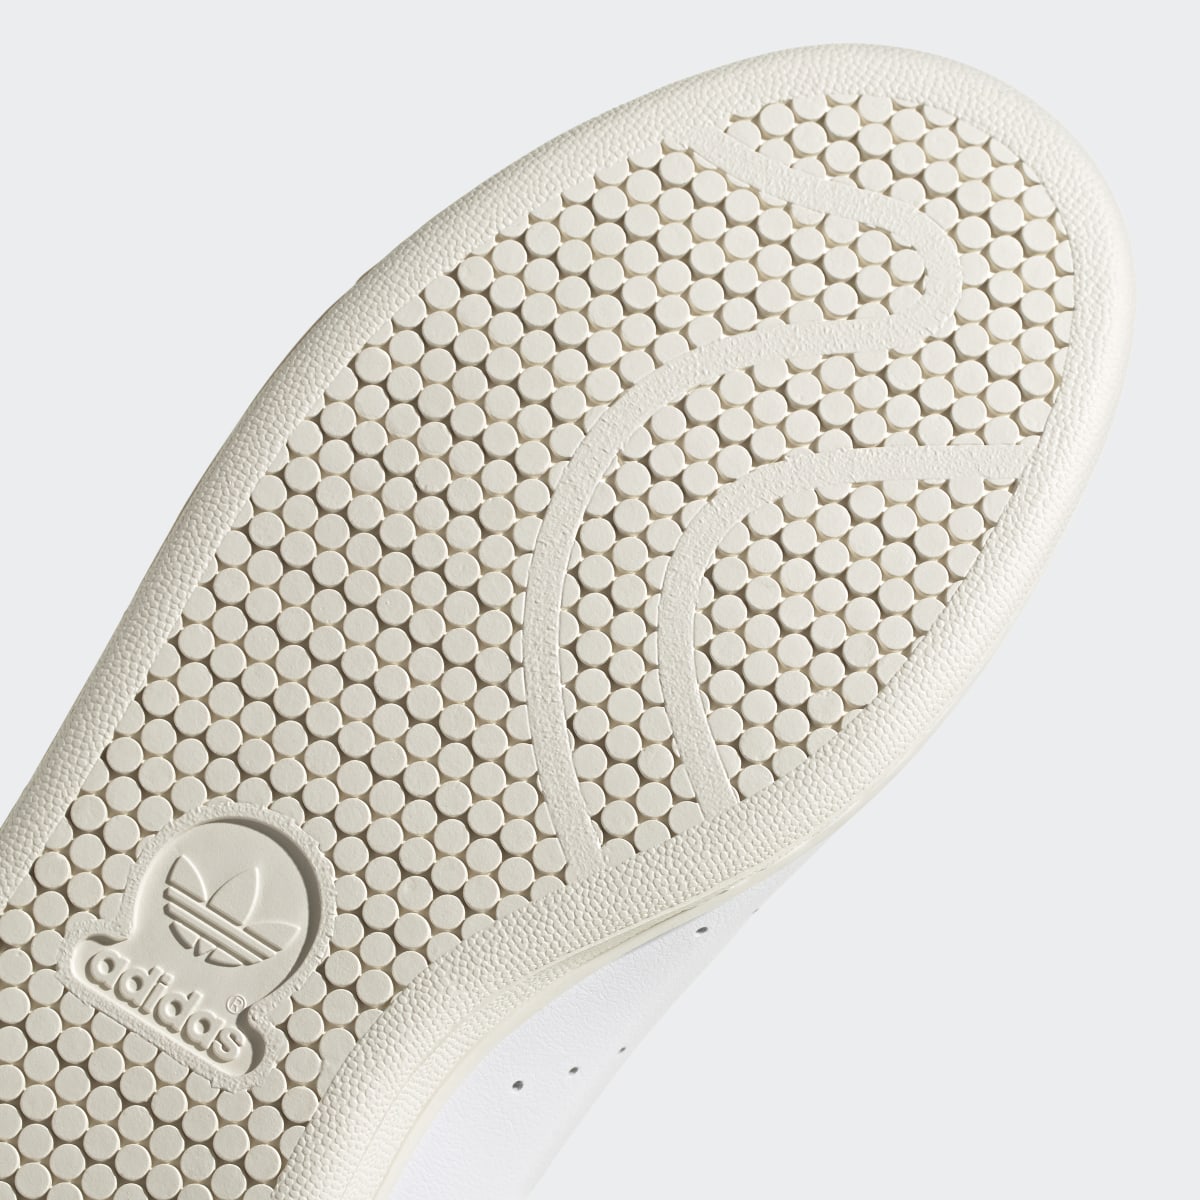 Adidas Stan Smith Ayakkabı. 10